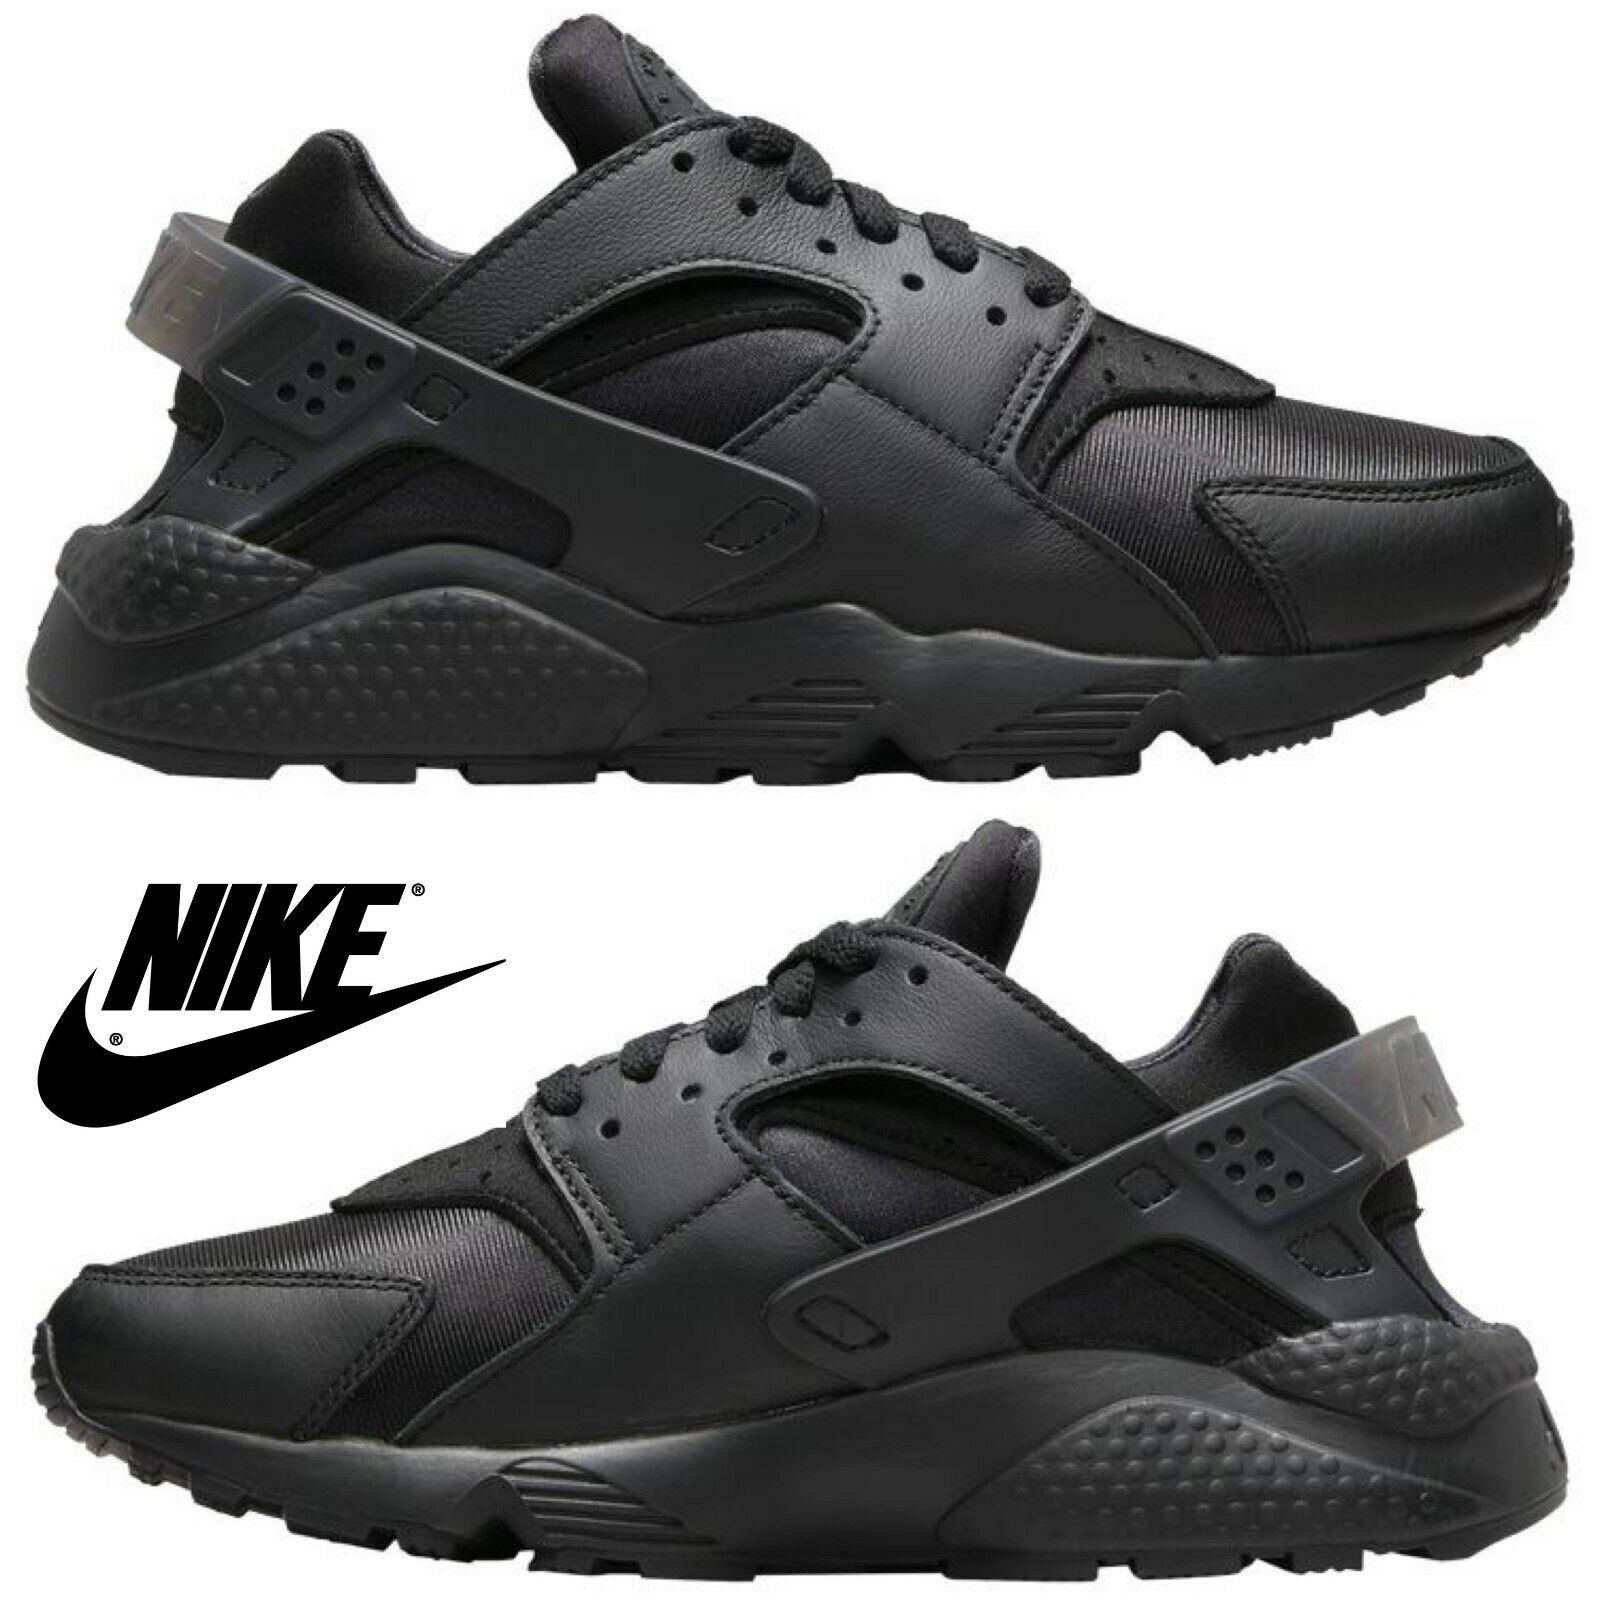 Nike Air Huarache Women`s Casual Shoes Running Athletic Comfort Sport Black - Black , Black/Black/Anthracite Manufacturer